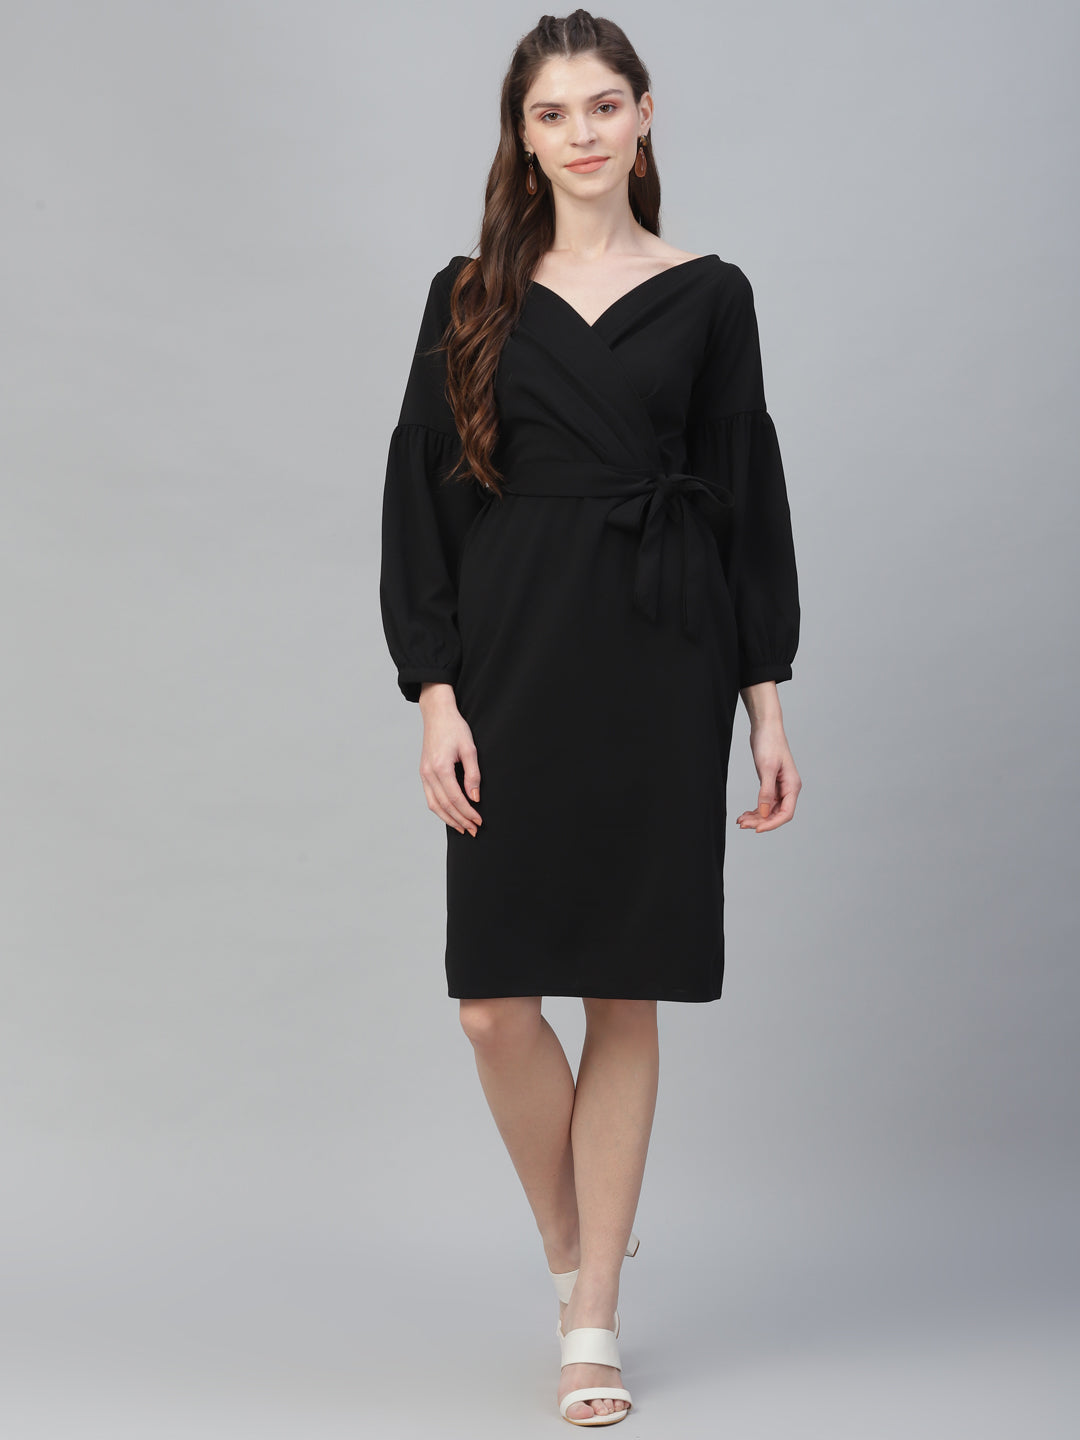 Athena Black V-Neck Wrap Dress - Athena Lifestyle